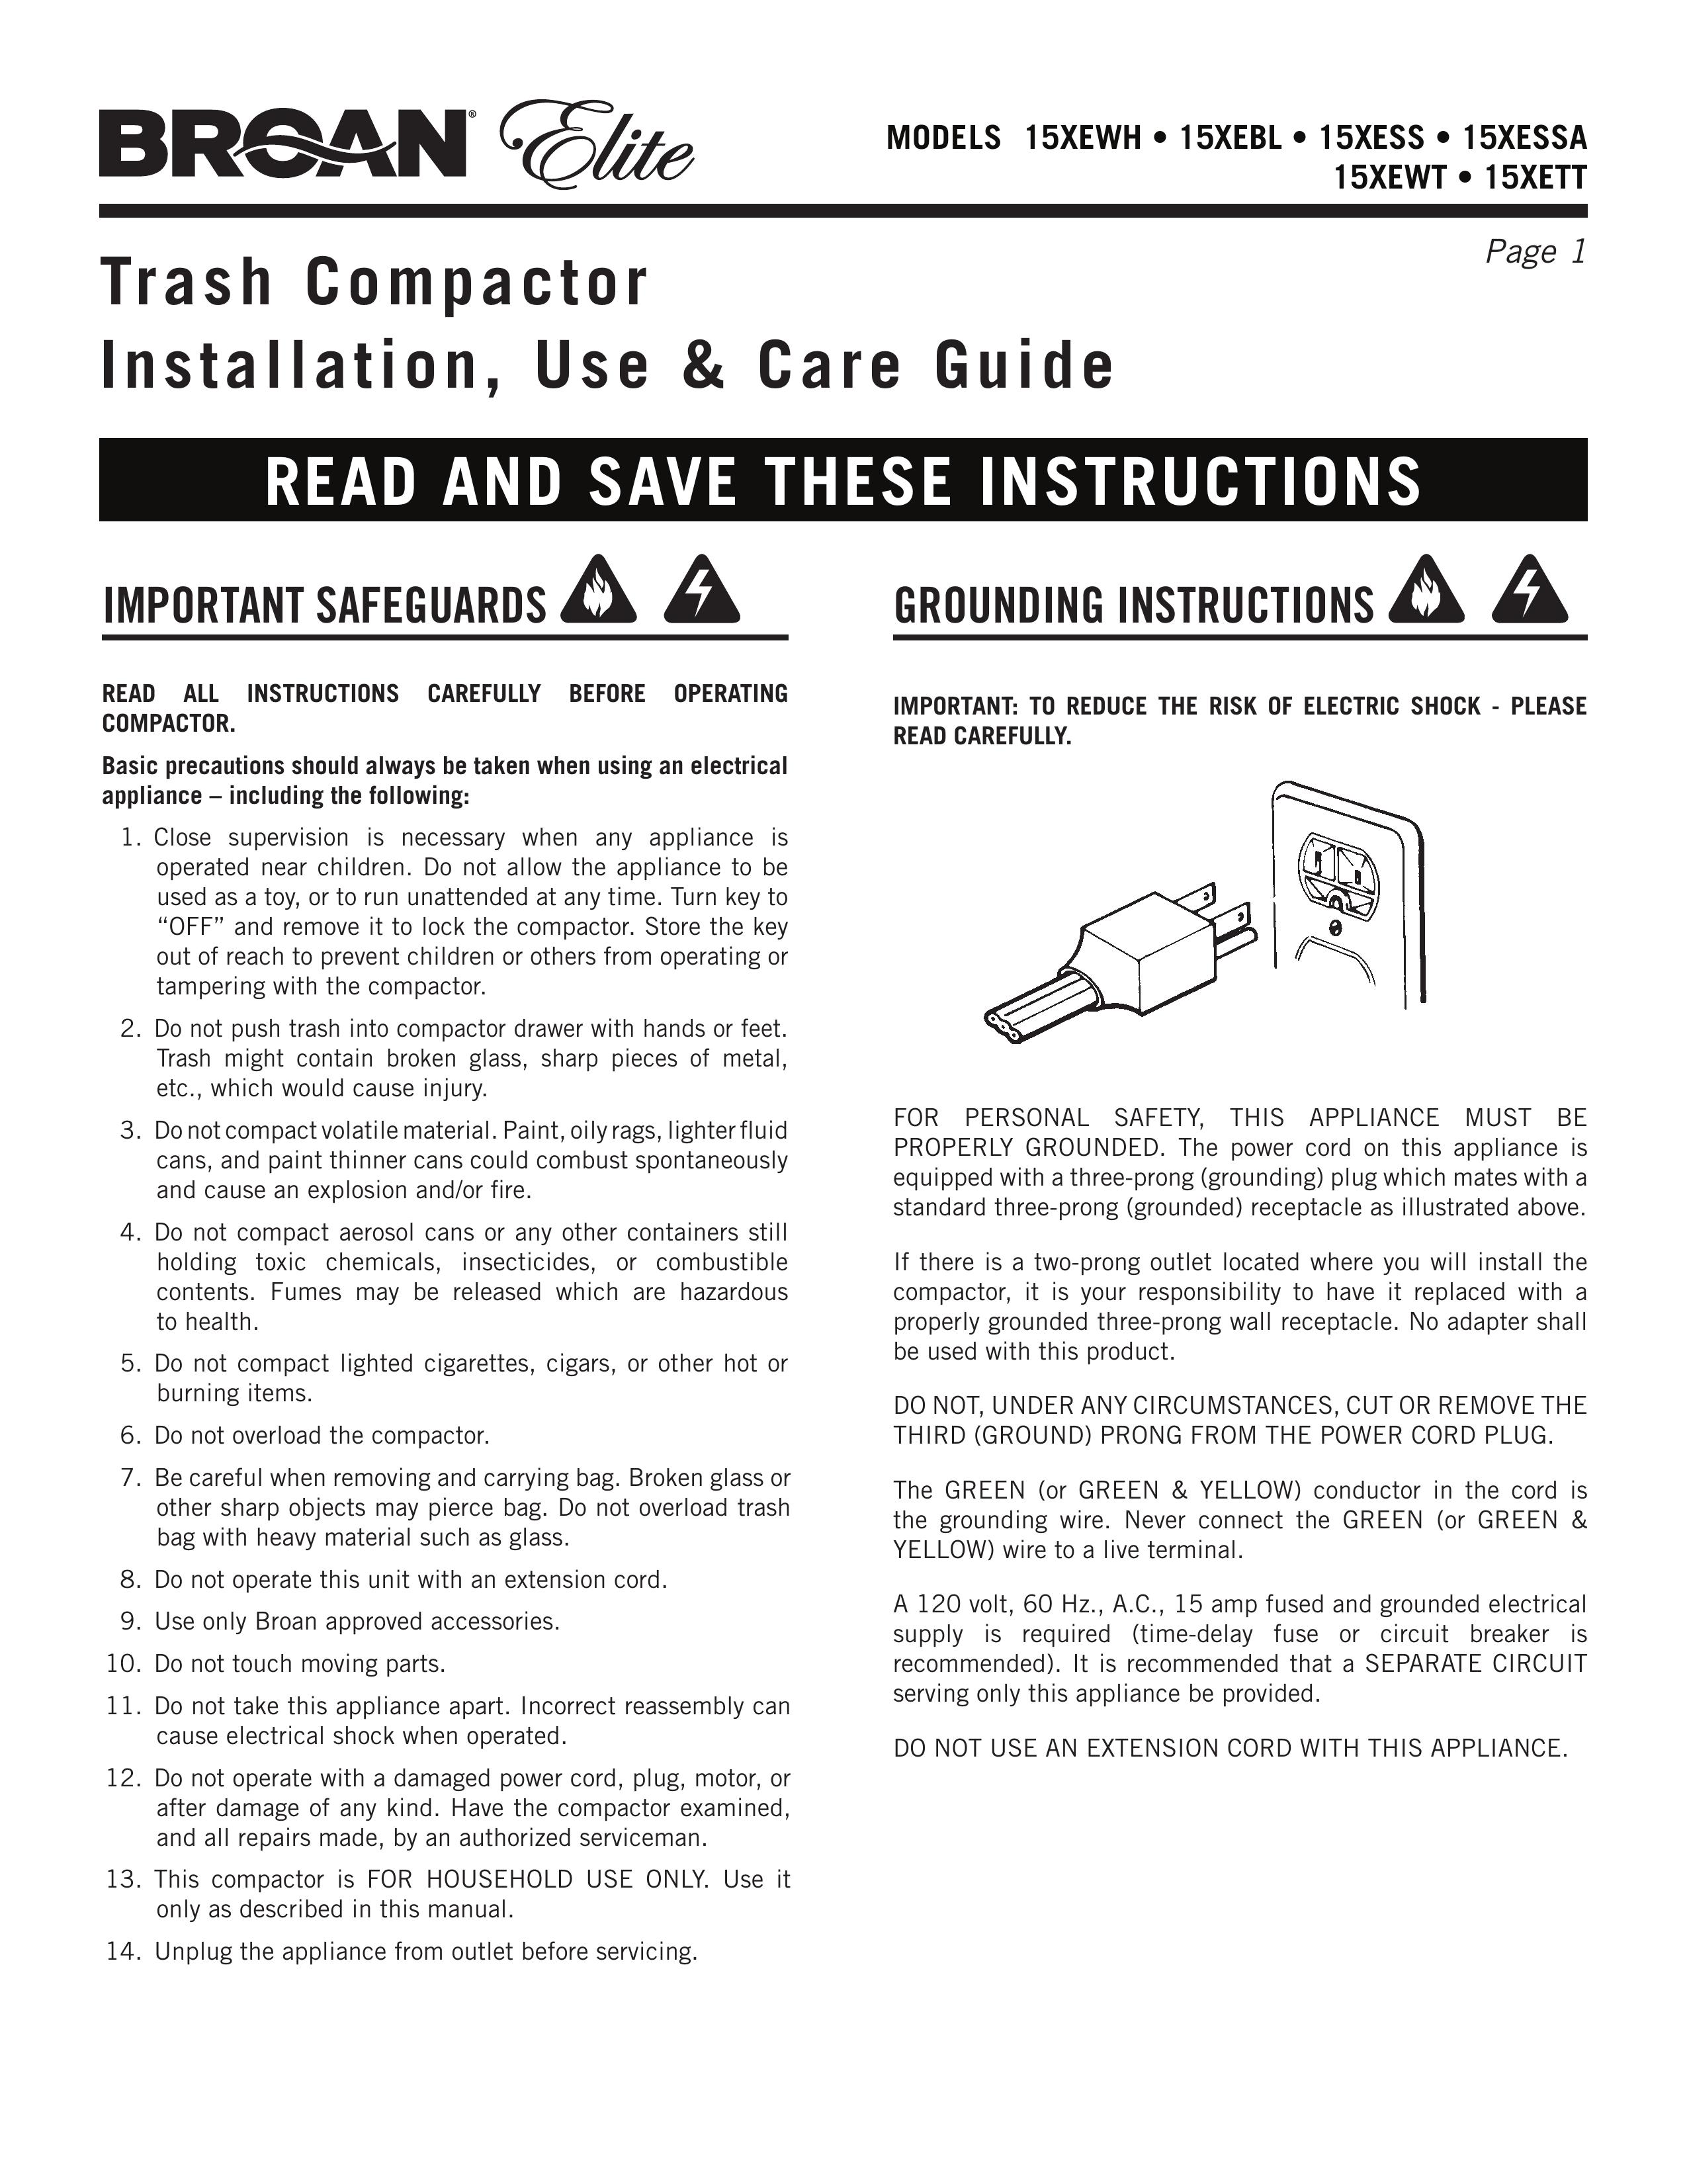 Broan 15XessA Trash Compactor User Manual